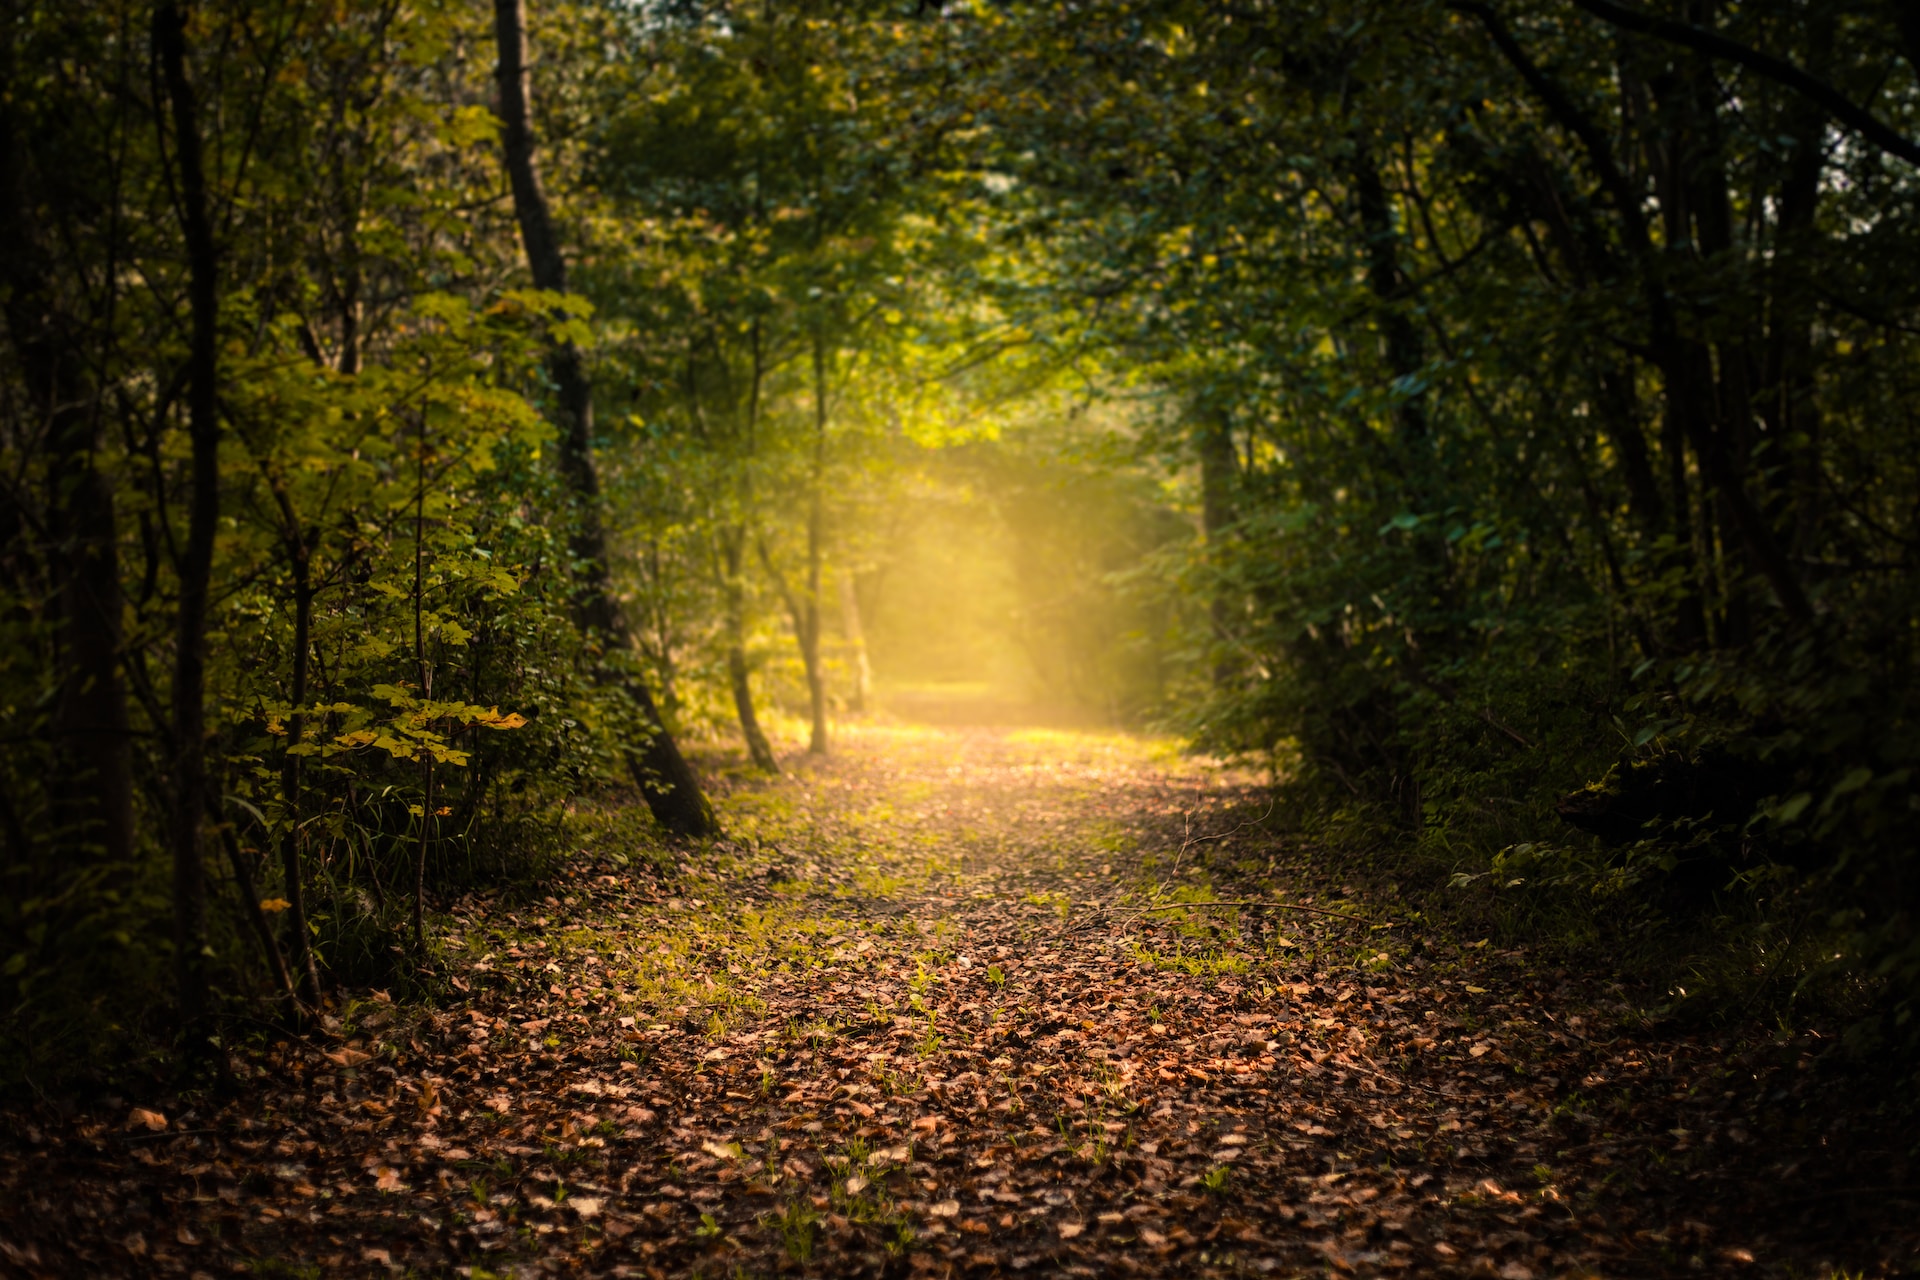 Path through trees